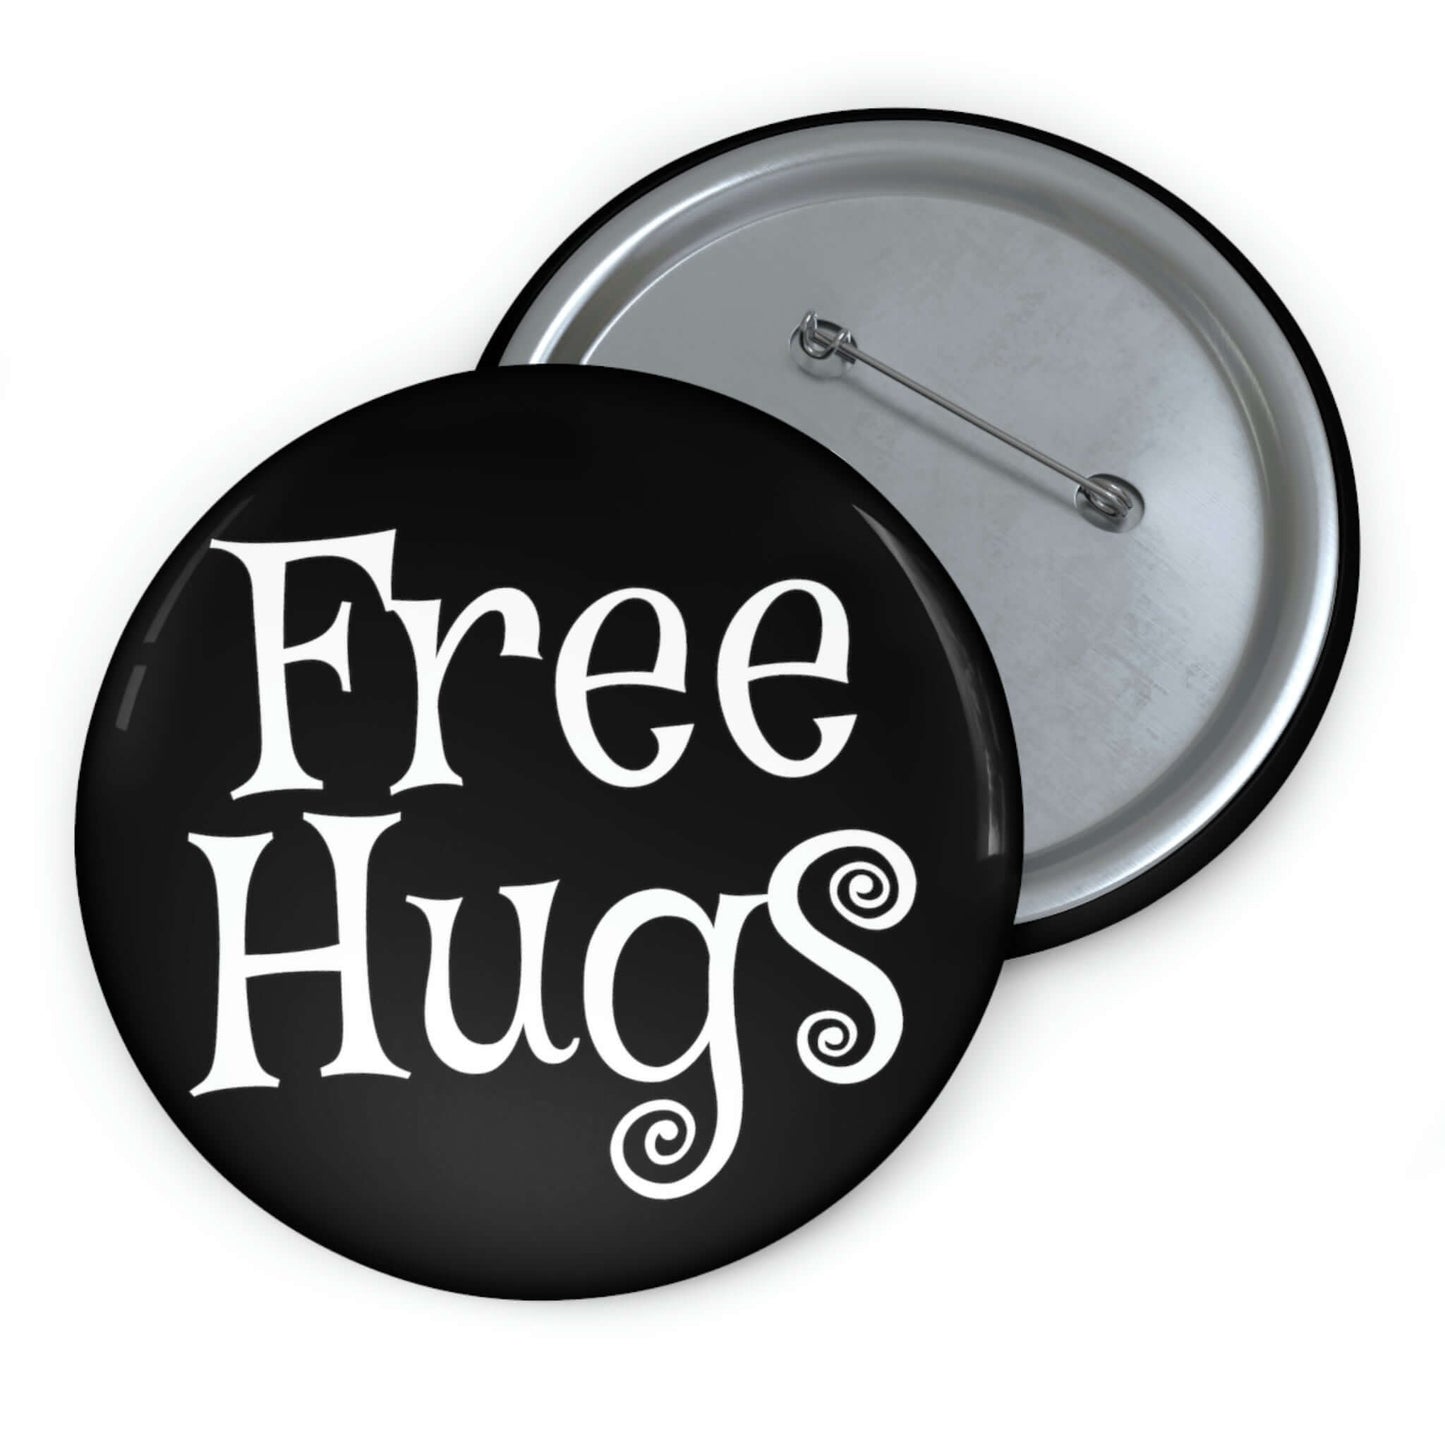 Pinback button that says Free Hugs.